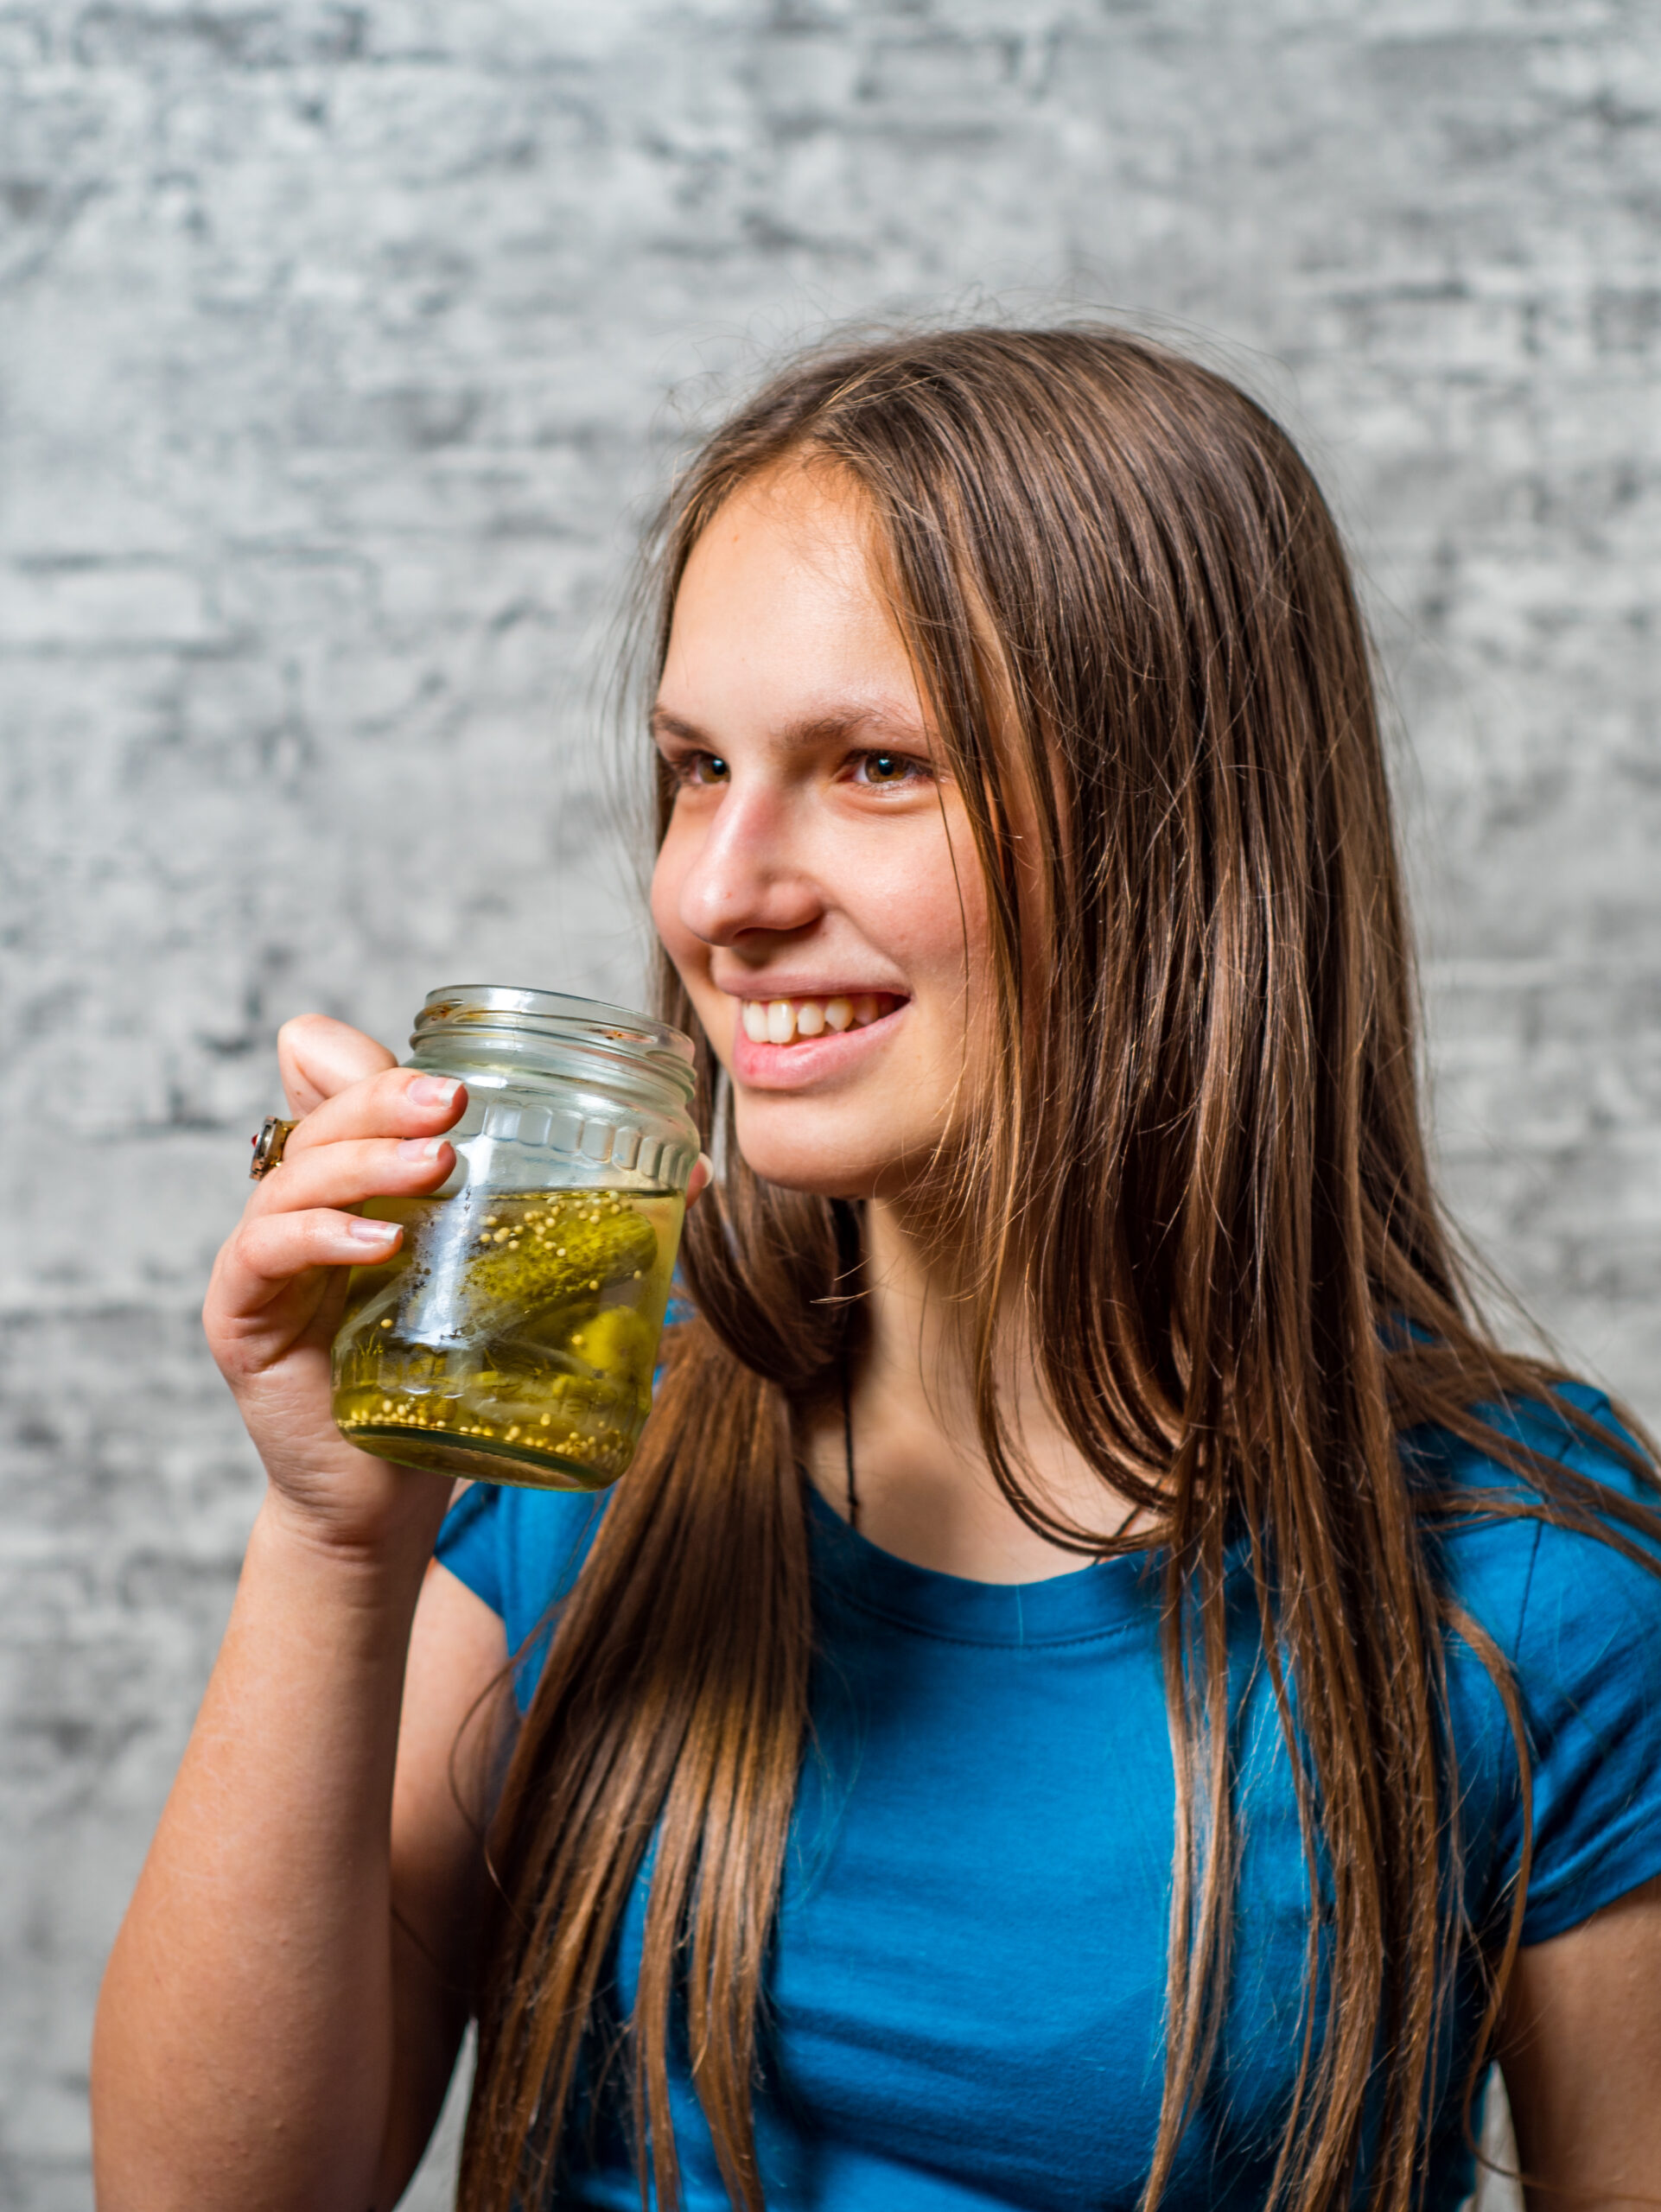 Best Uses for Leftover Pickle Juice; drink it